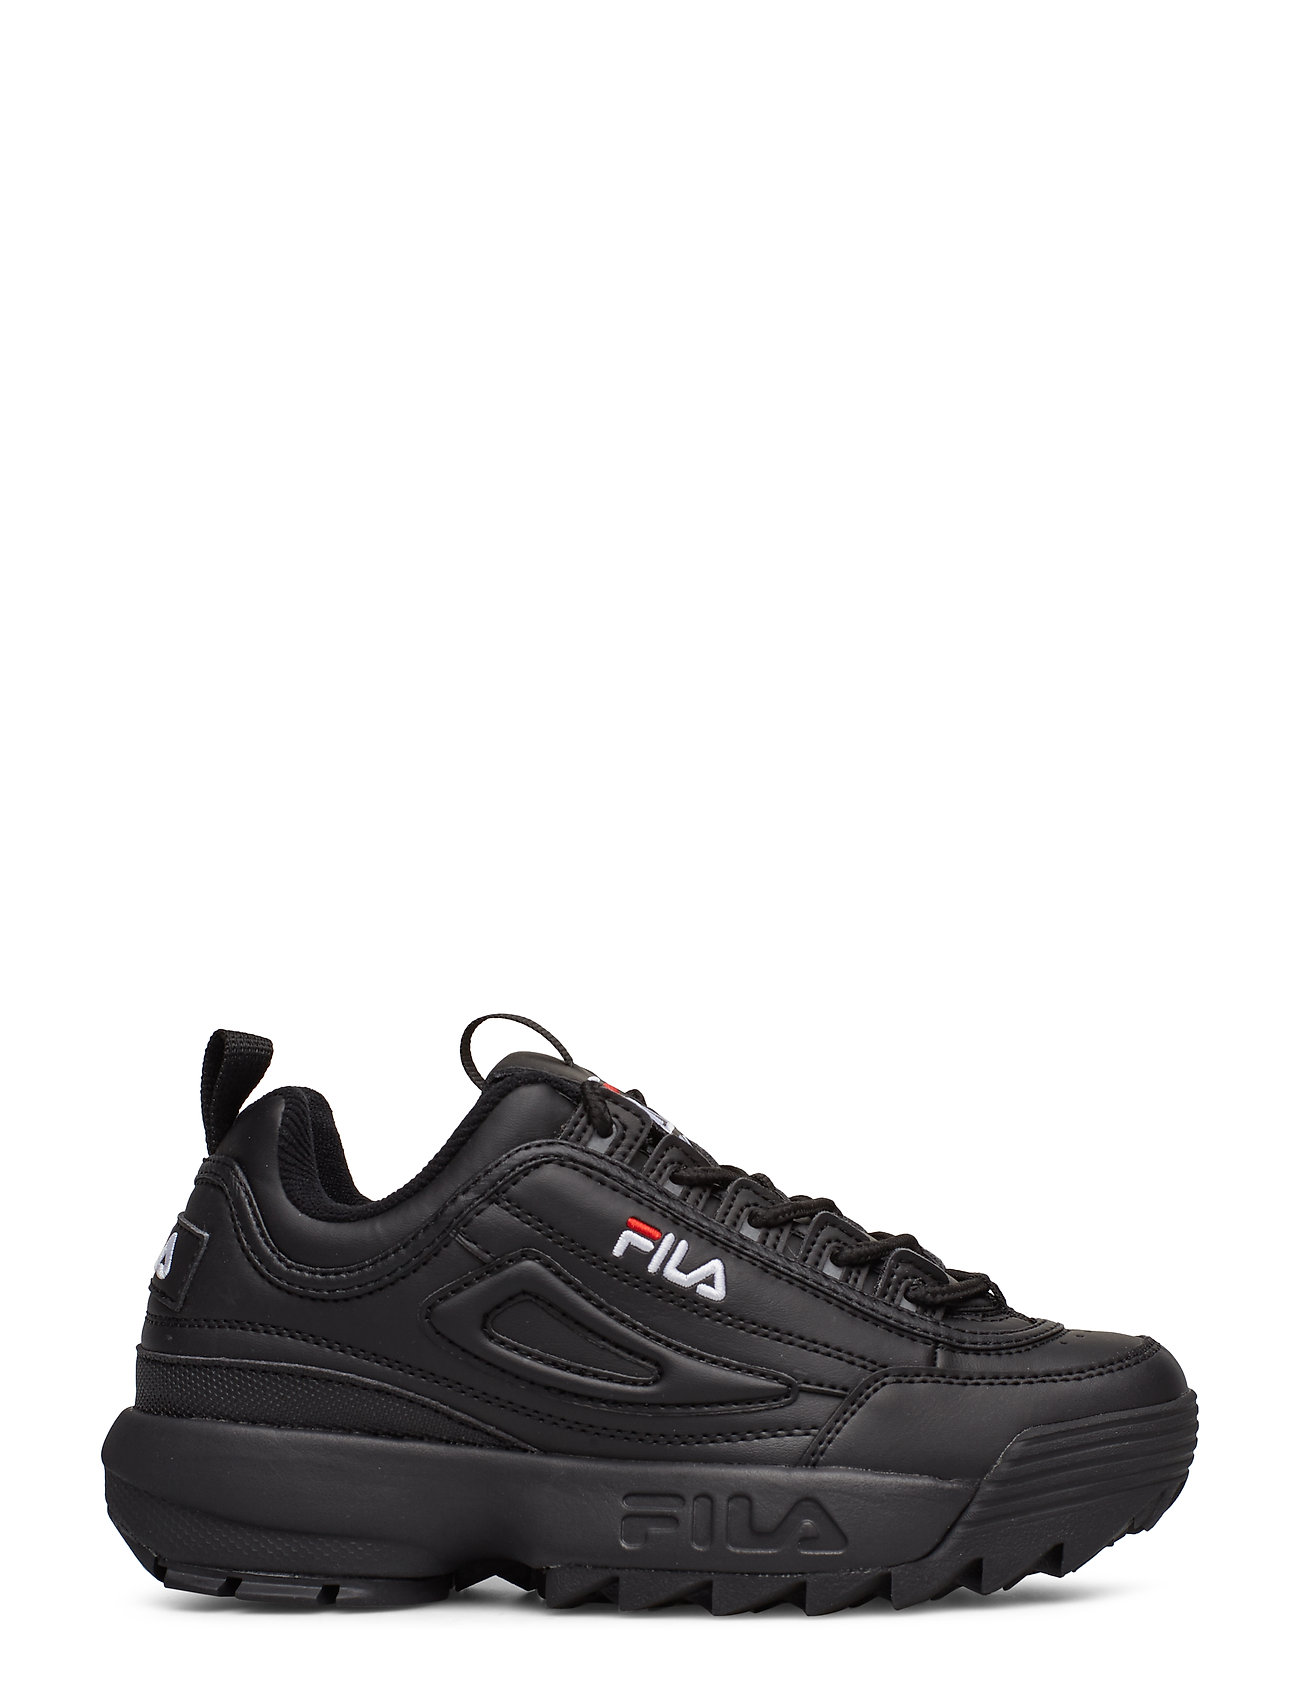 FILA - DISRUPTOR wmn - chunky sneakers - black/black - 1